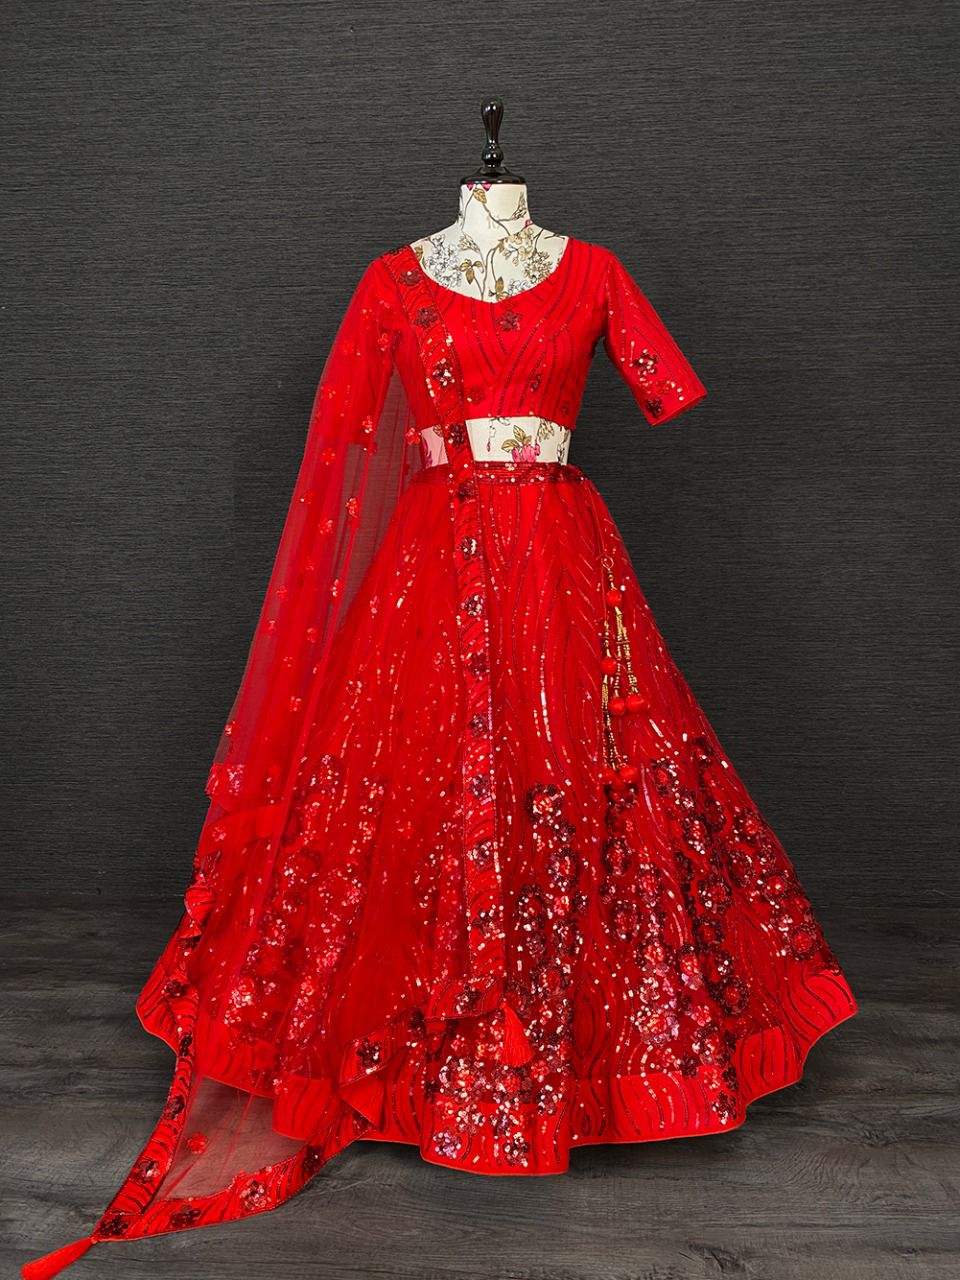 Haldi costumes – bestlooks | Lehenga saree design, Lengha blouse designs,  Designer dresses indian